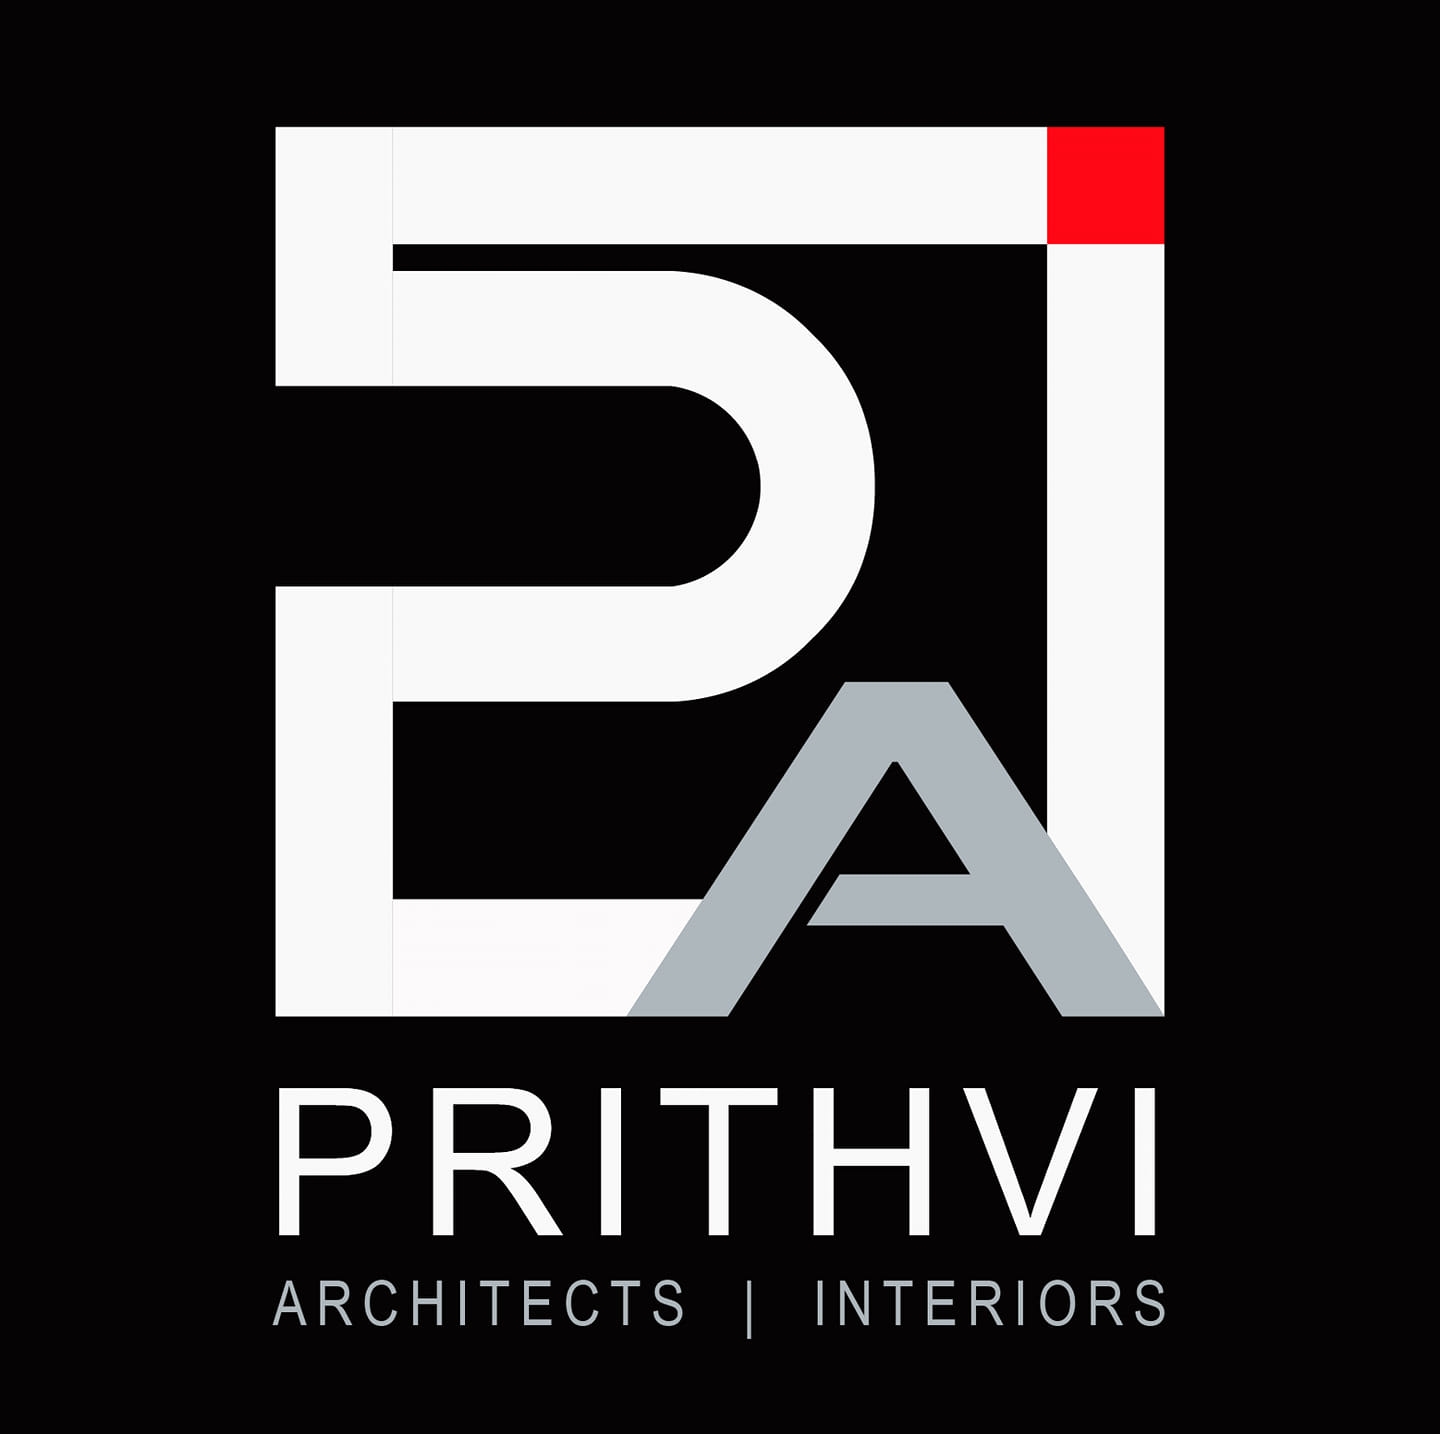 Prithvi Architects & Interiors|IT Services|Professional Services